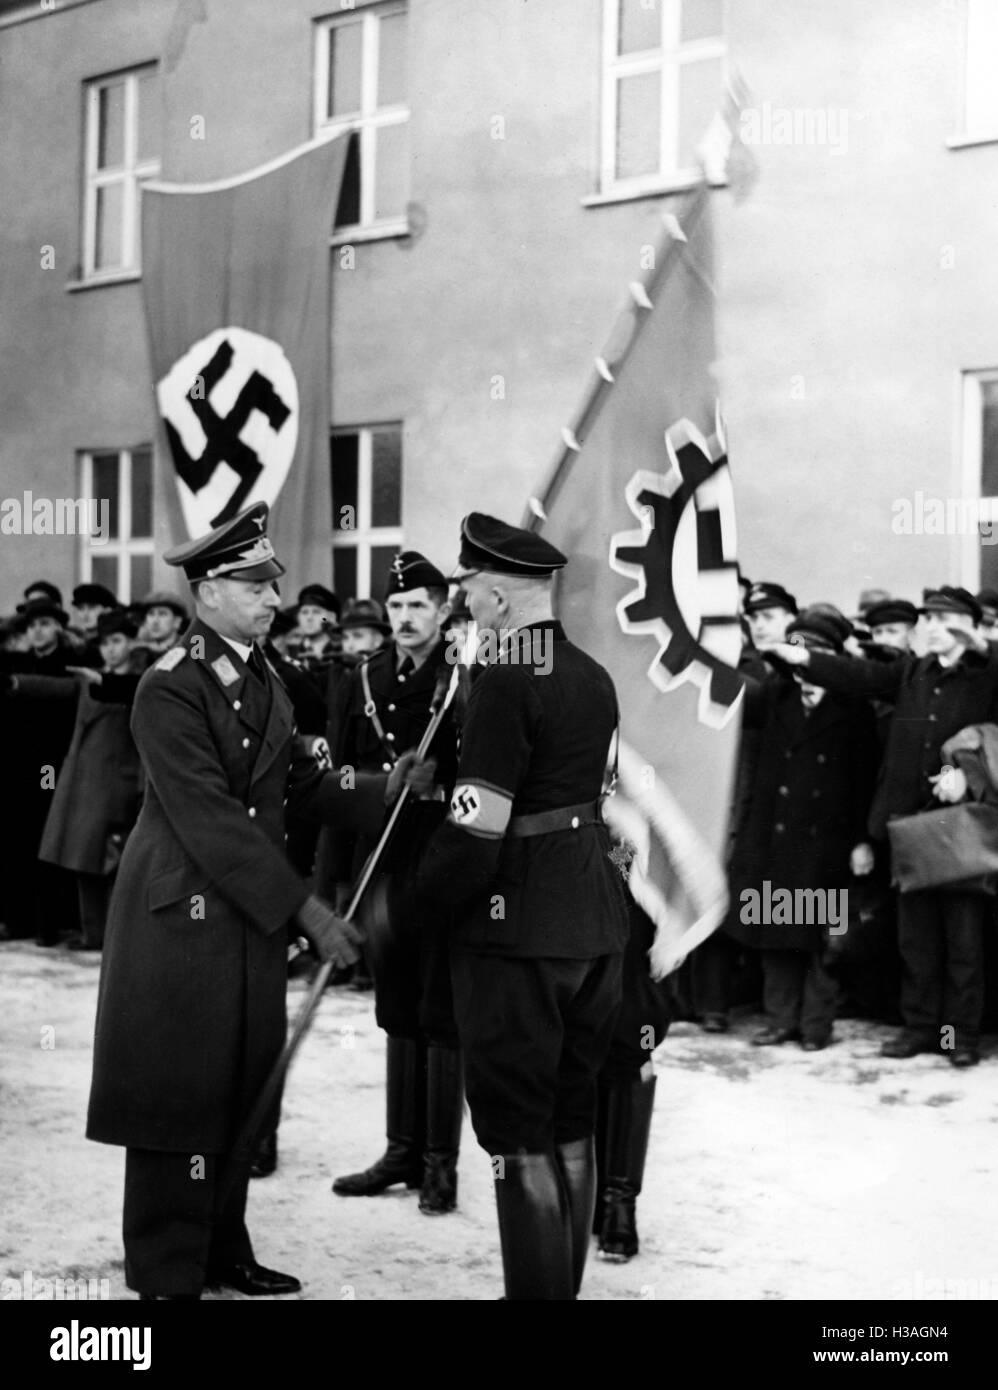 DAF Unit Flag (Deutsche Arbeitsfront Fahne) - Flags & Banners